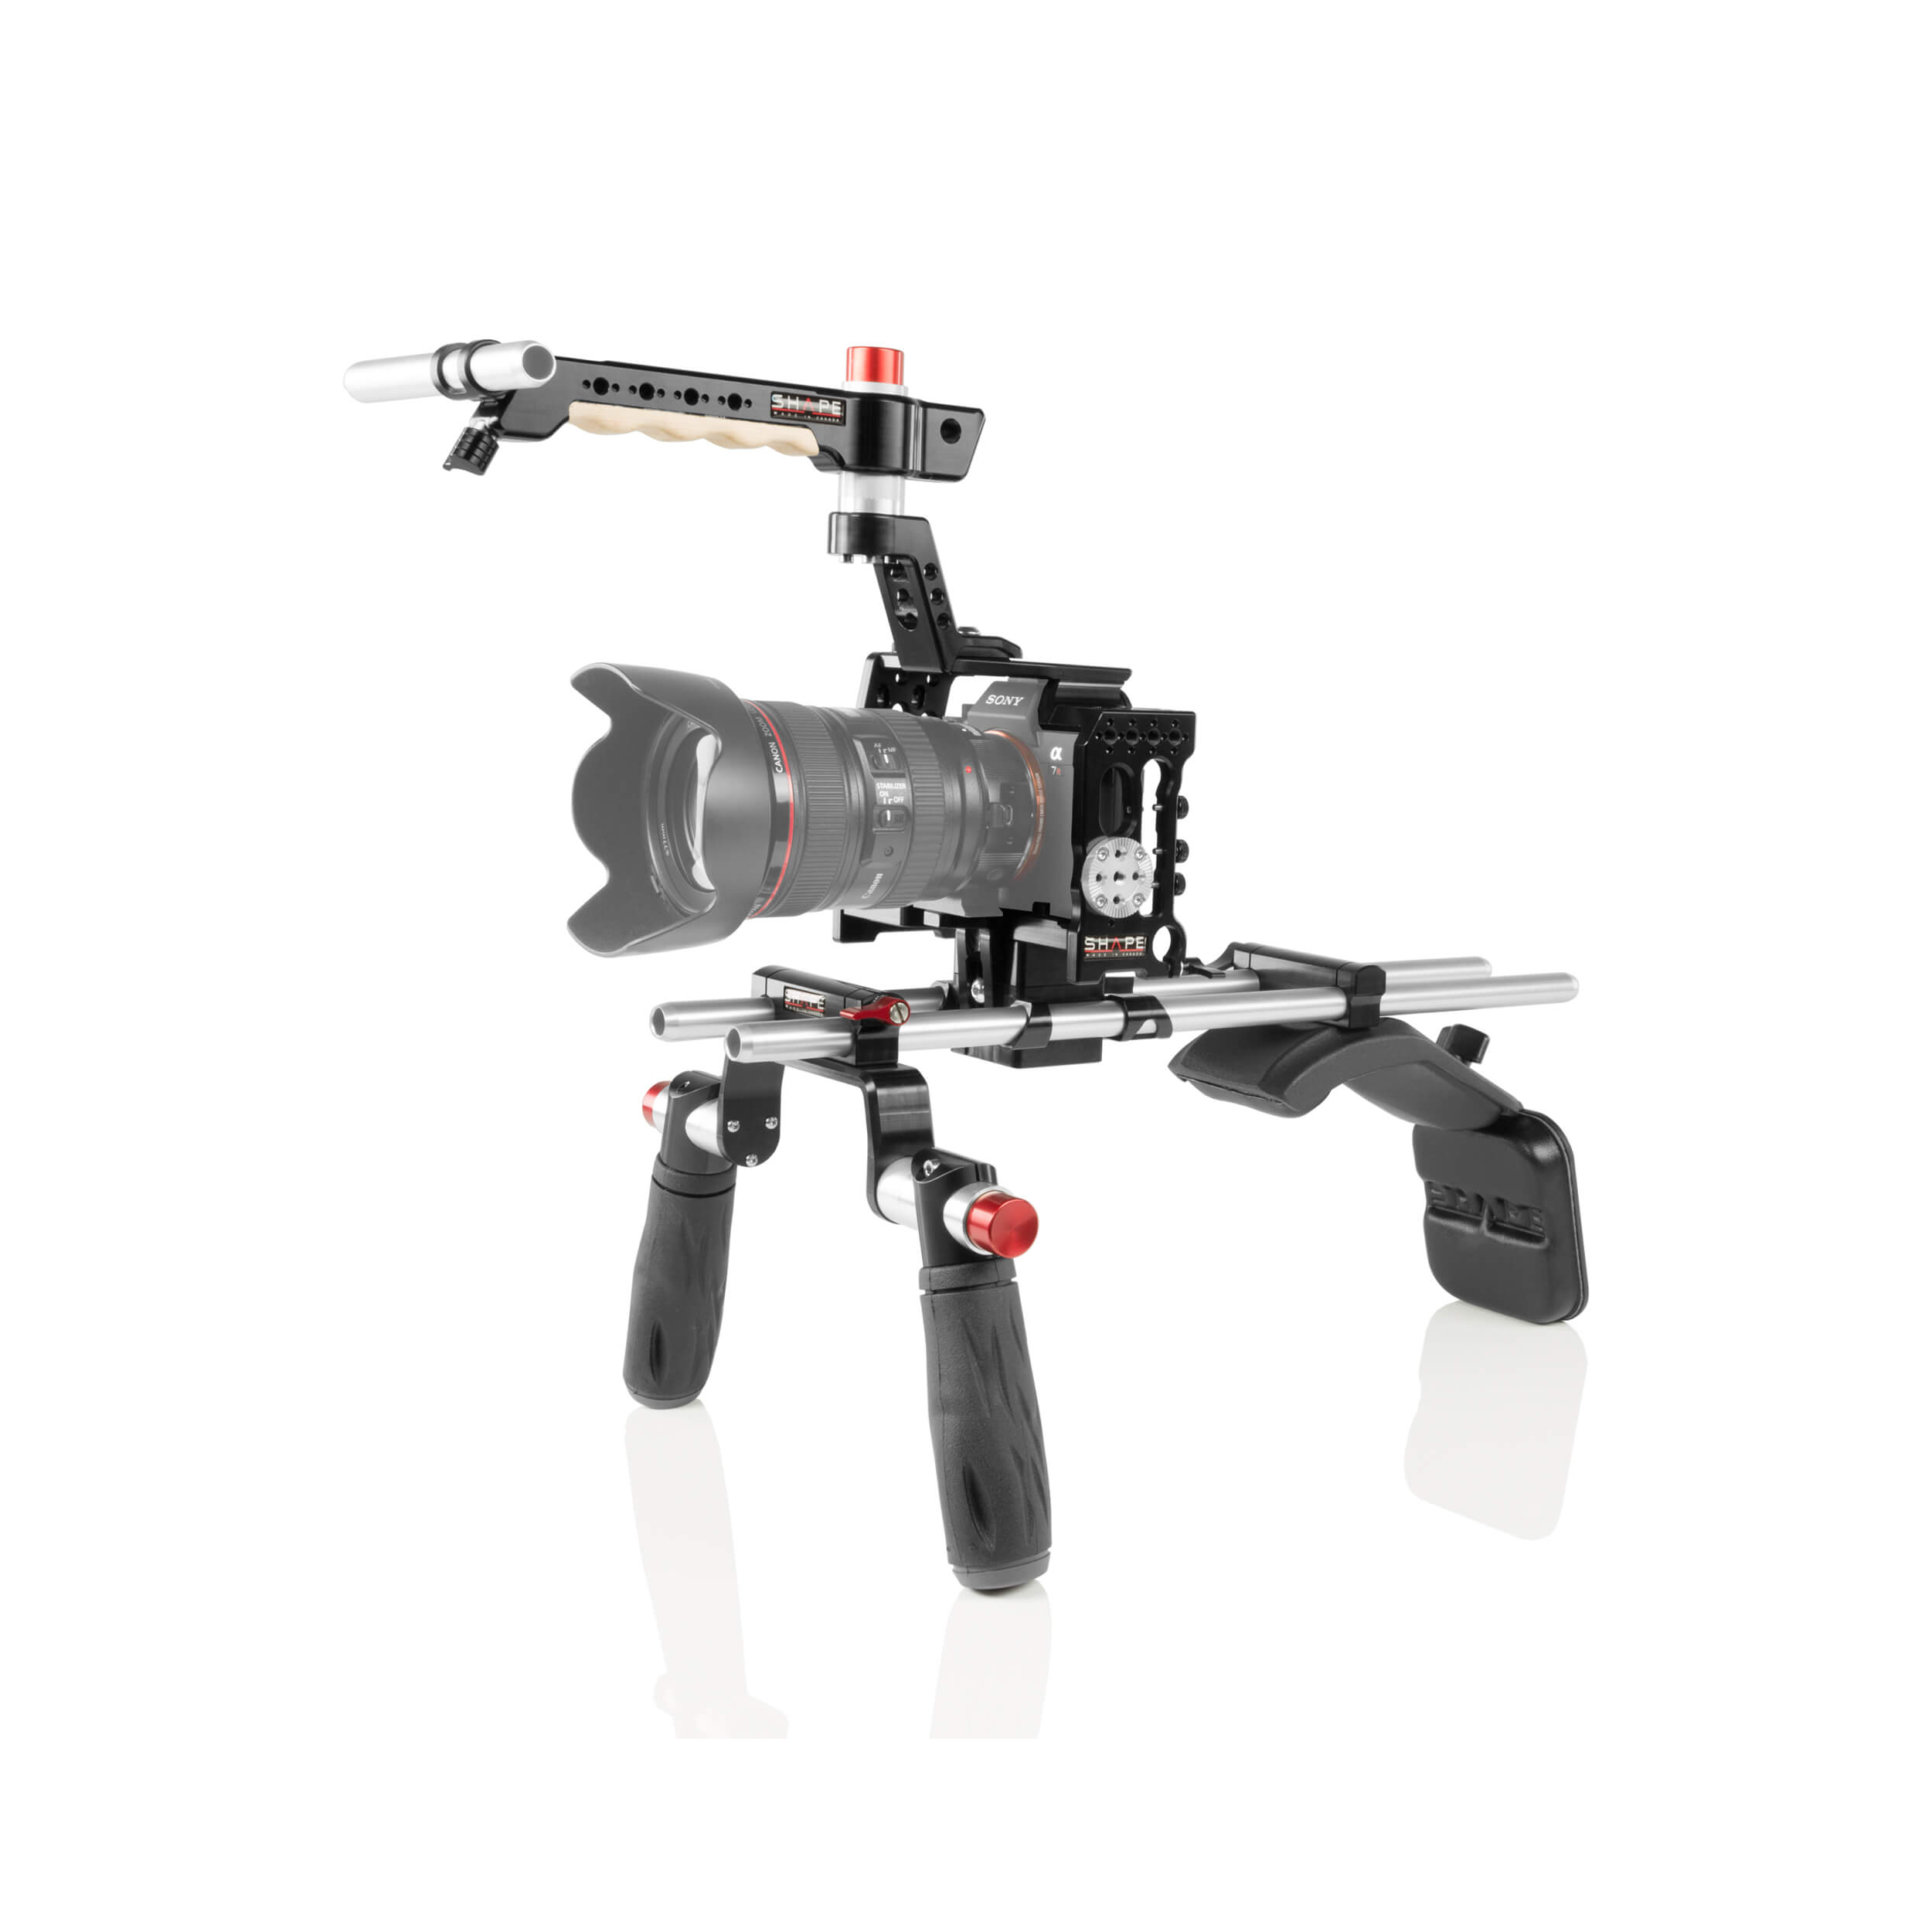 SHAPE Shoulder Mount Kit for Sony a7R III/a7 III Camera